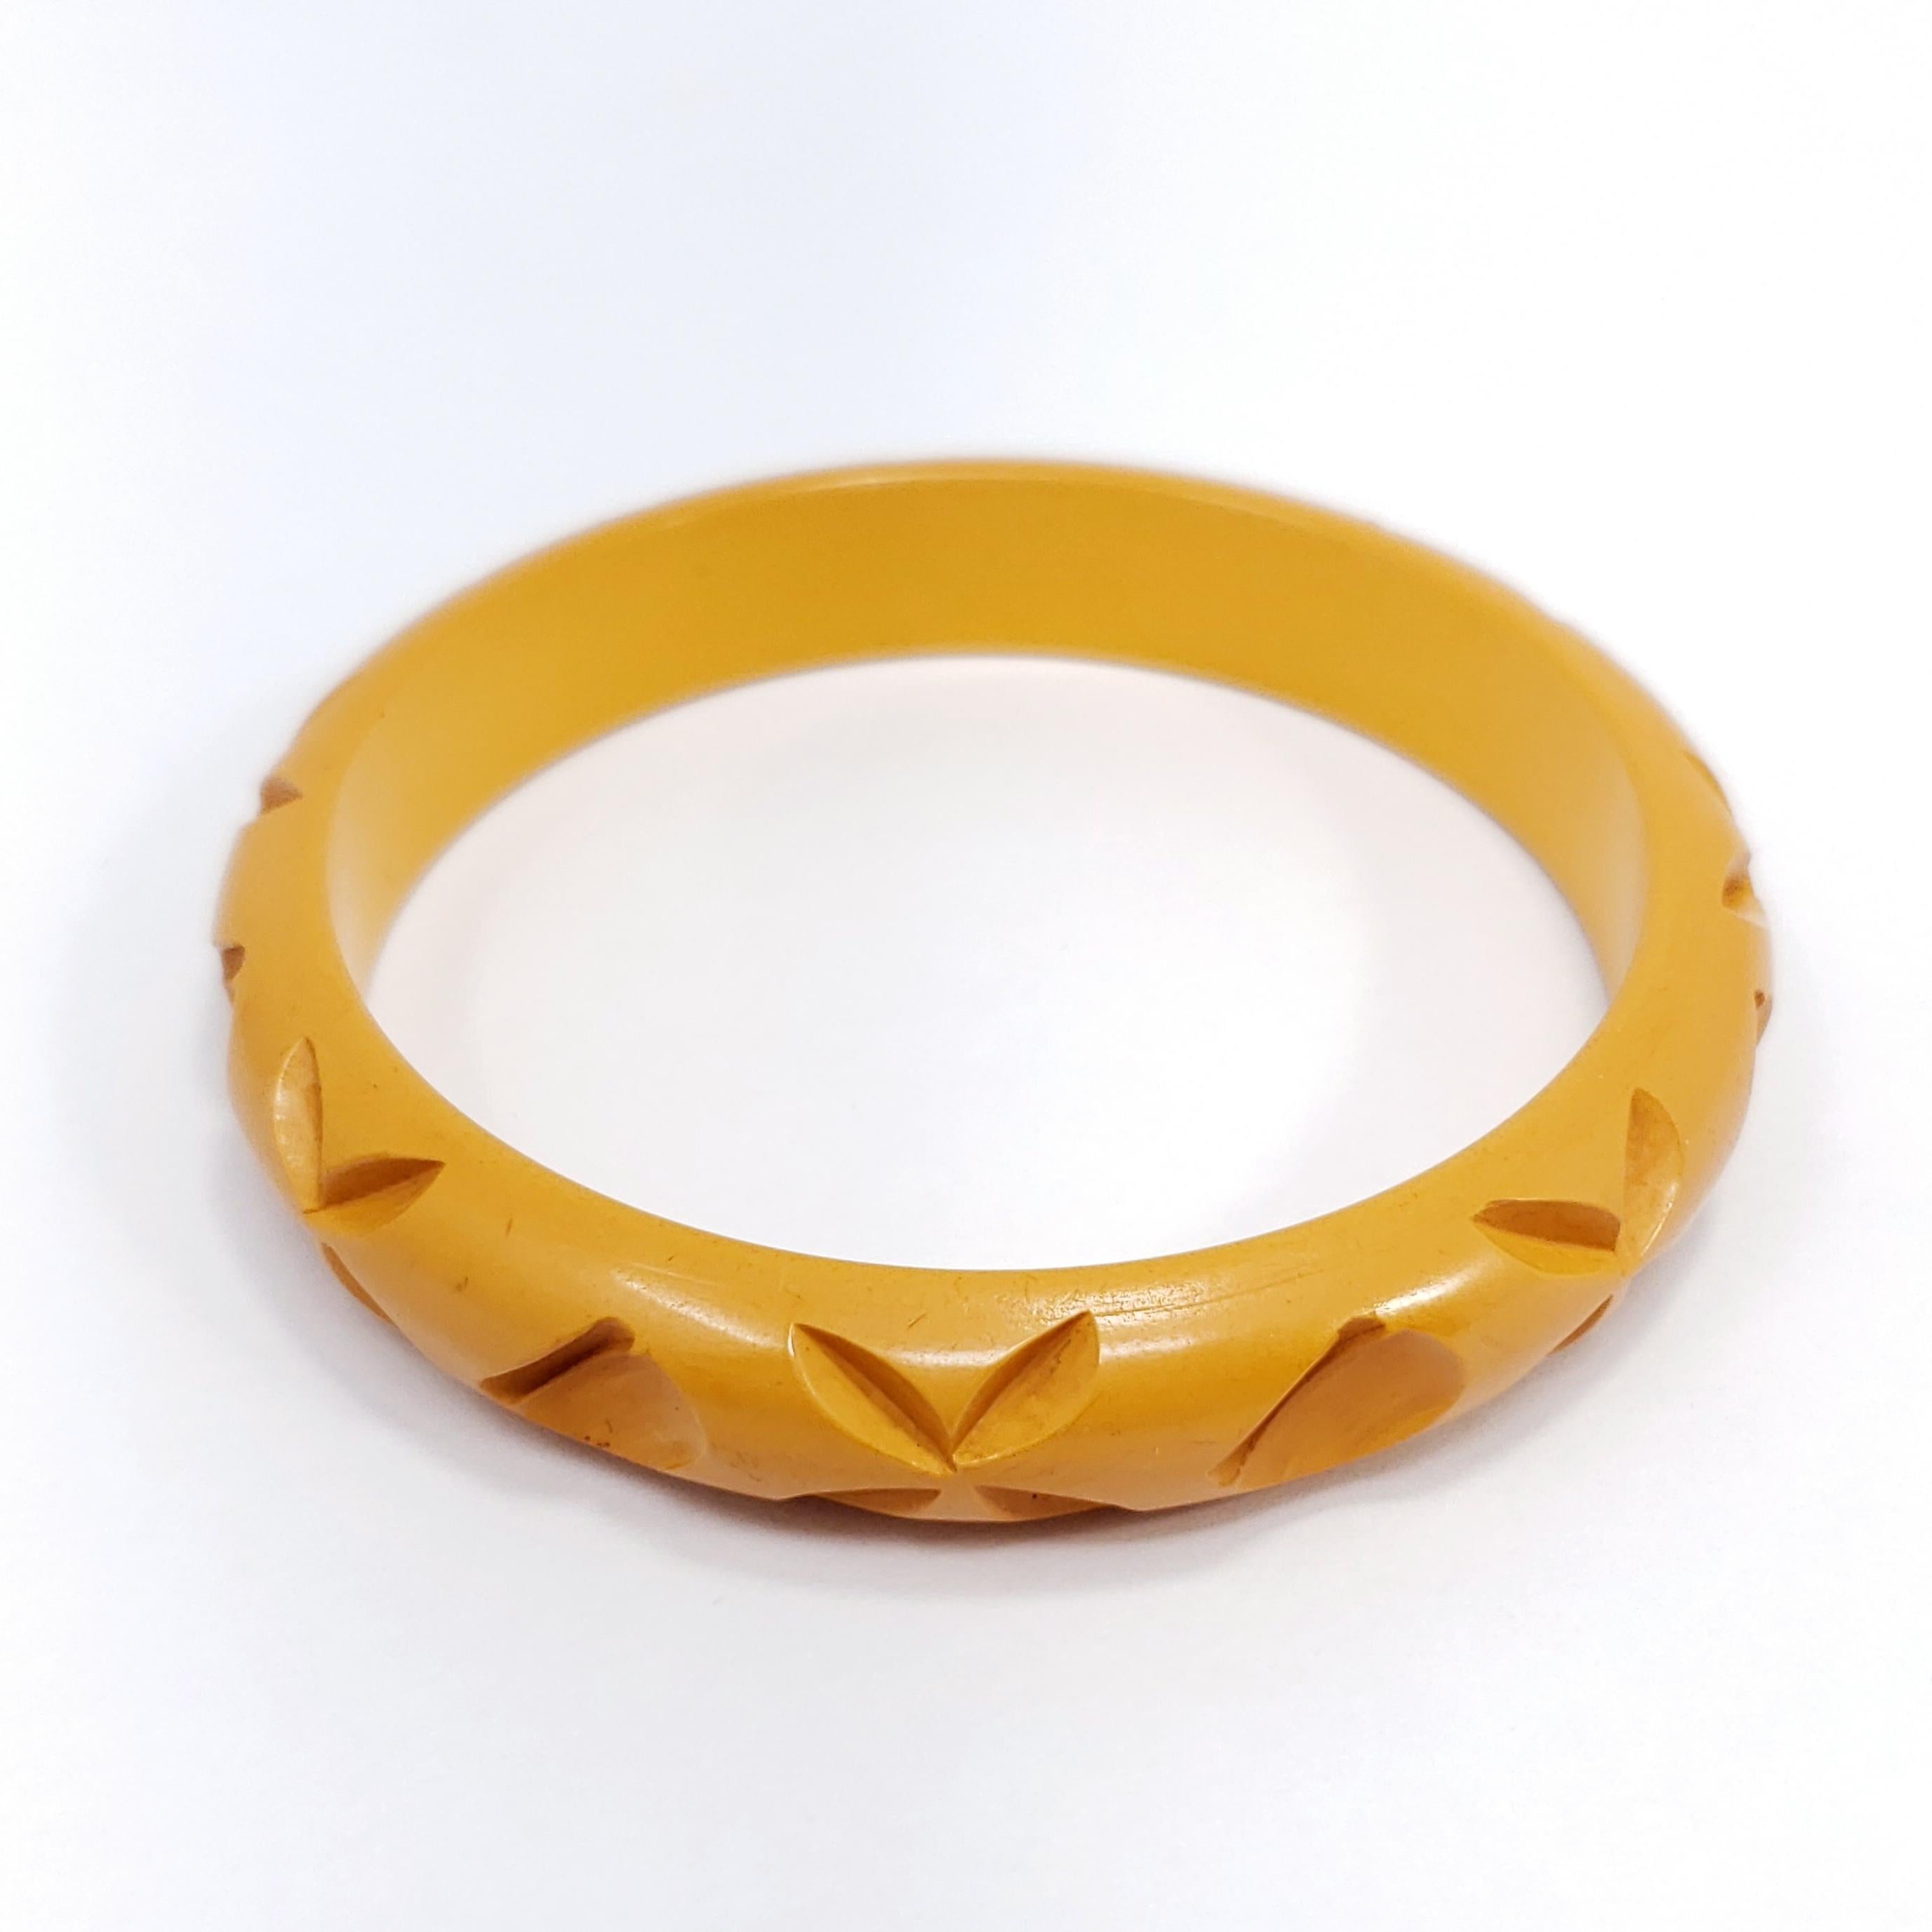 A vintage bakelite bangle bracelet with carved designs in golden butterscotch yellow color. 

Inner diameter: 6.45 cm
